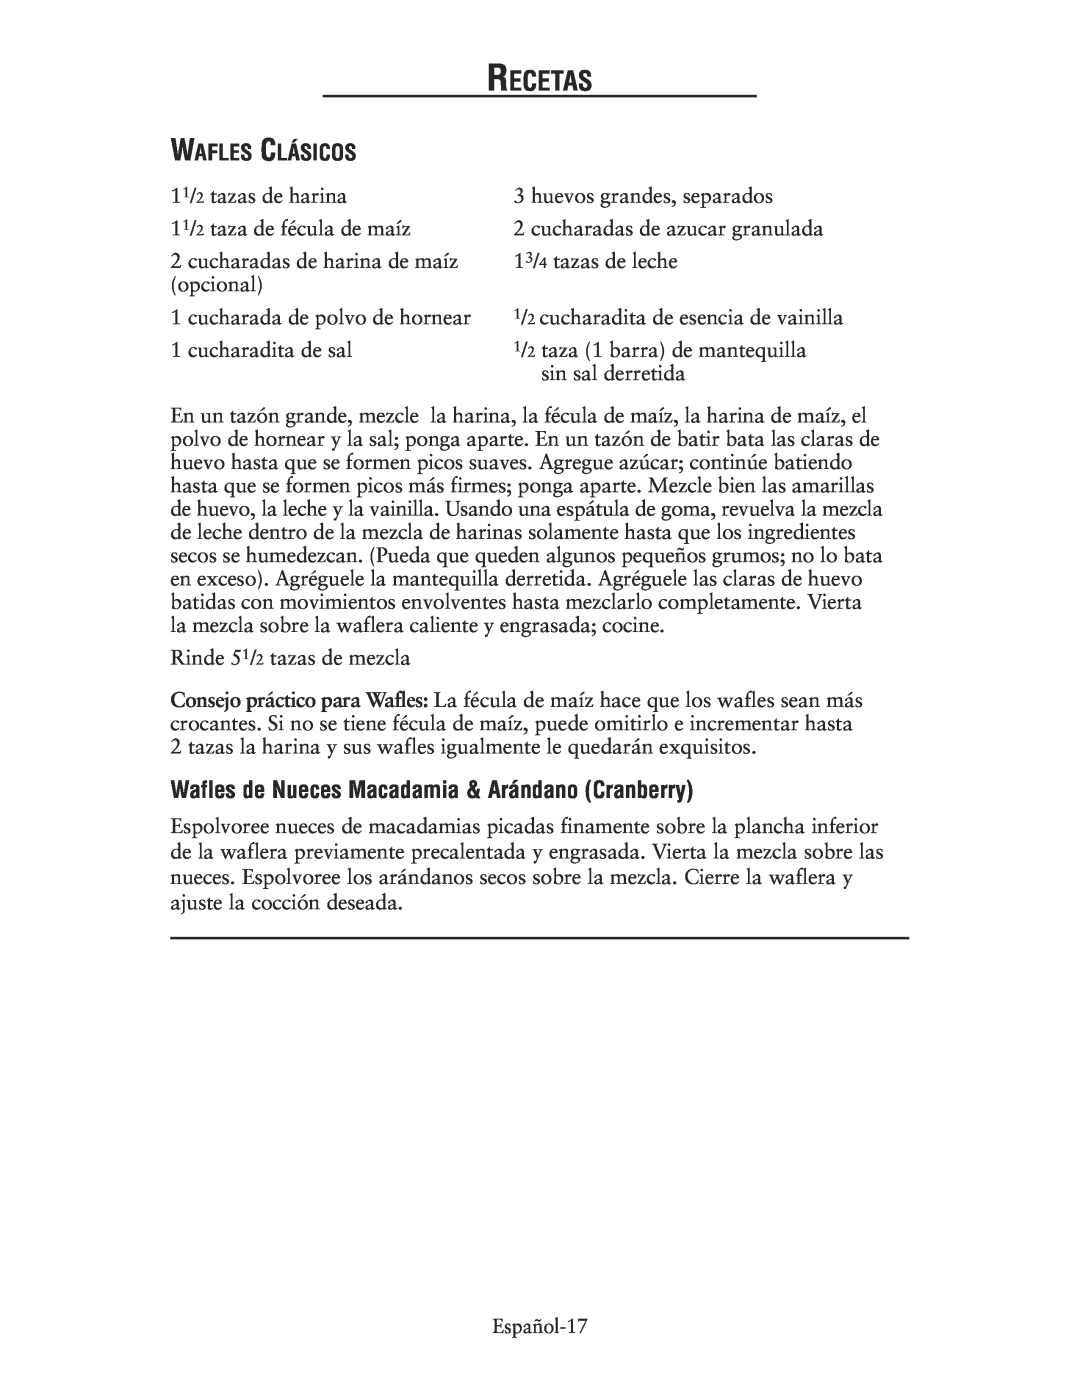 Oster 135018, CKSTWFBF10 user manual Recetas, Wafles de Nueces Macadamia & Arándano Cranberry, Wafles Clásicos 